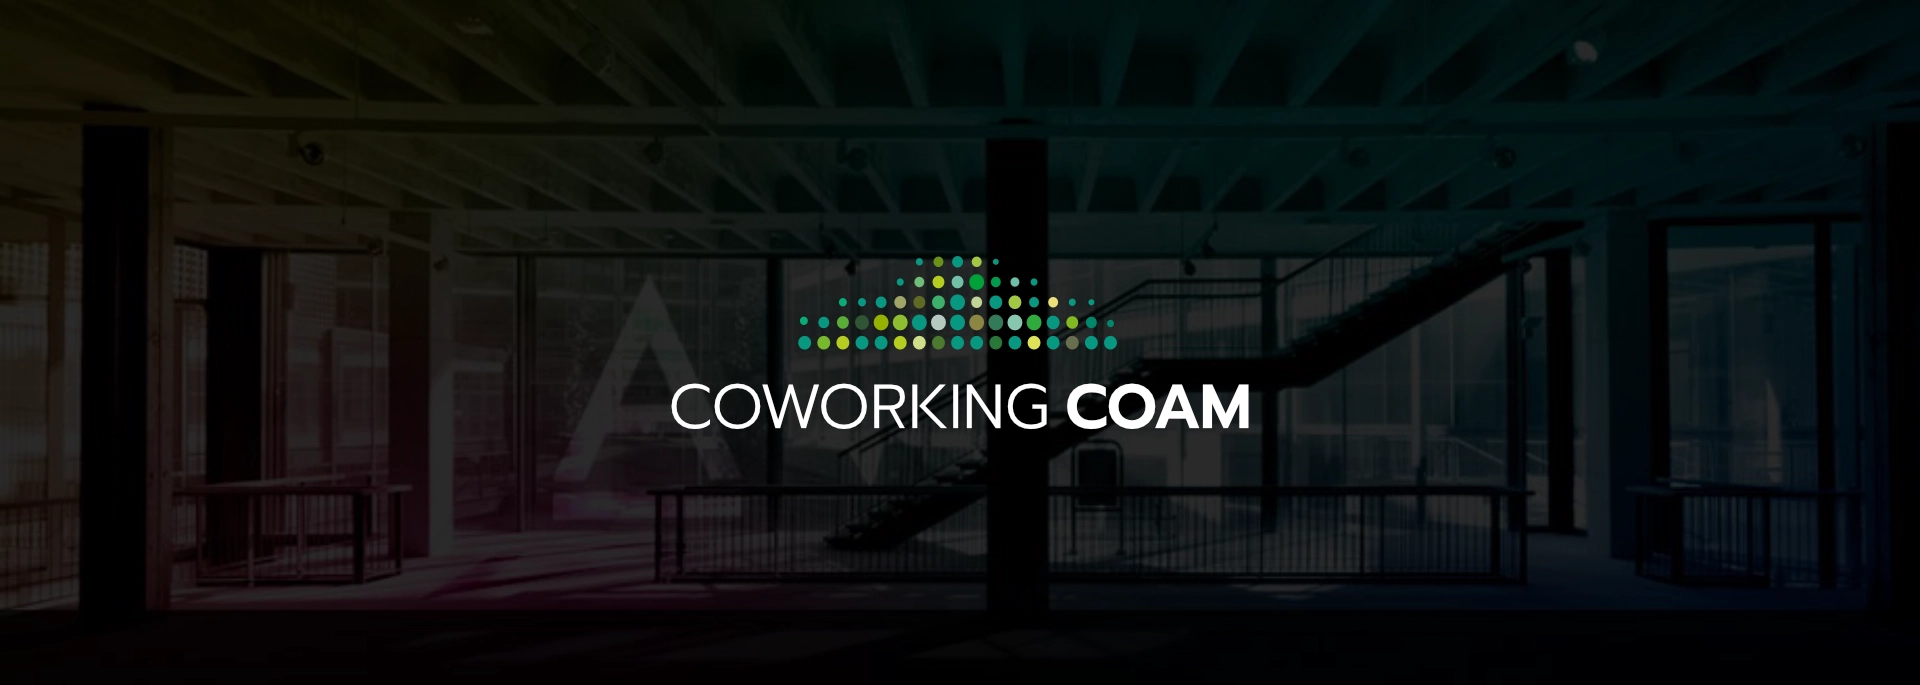 logotipo coworking COAM